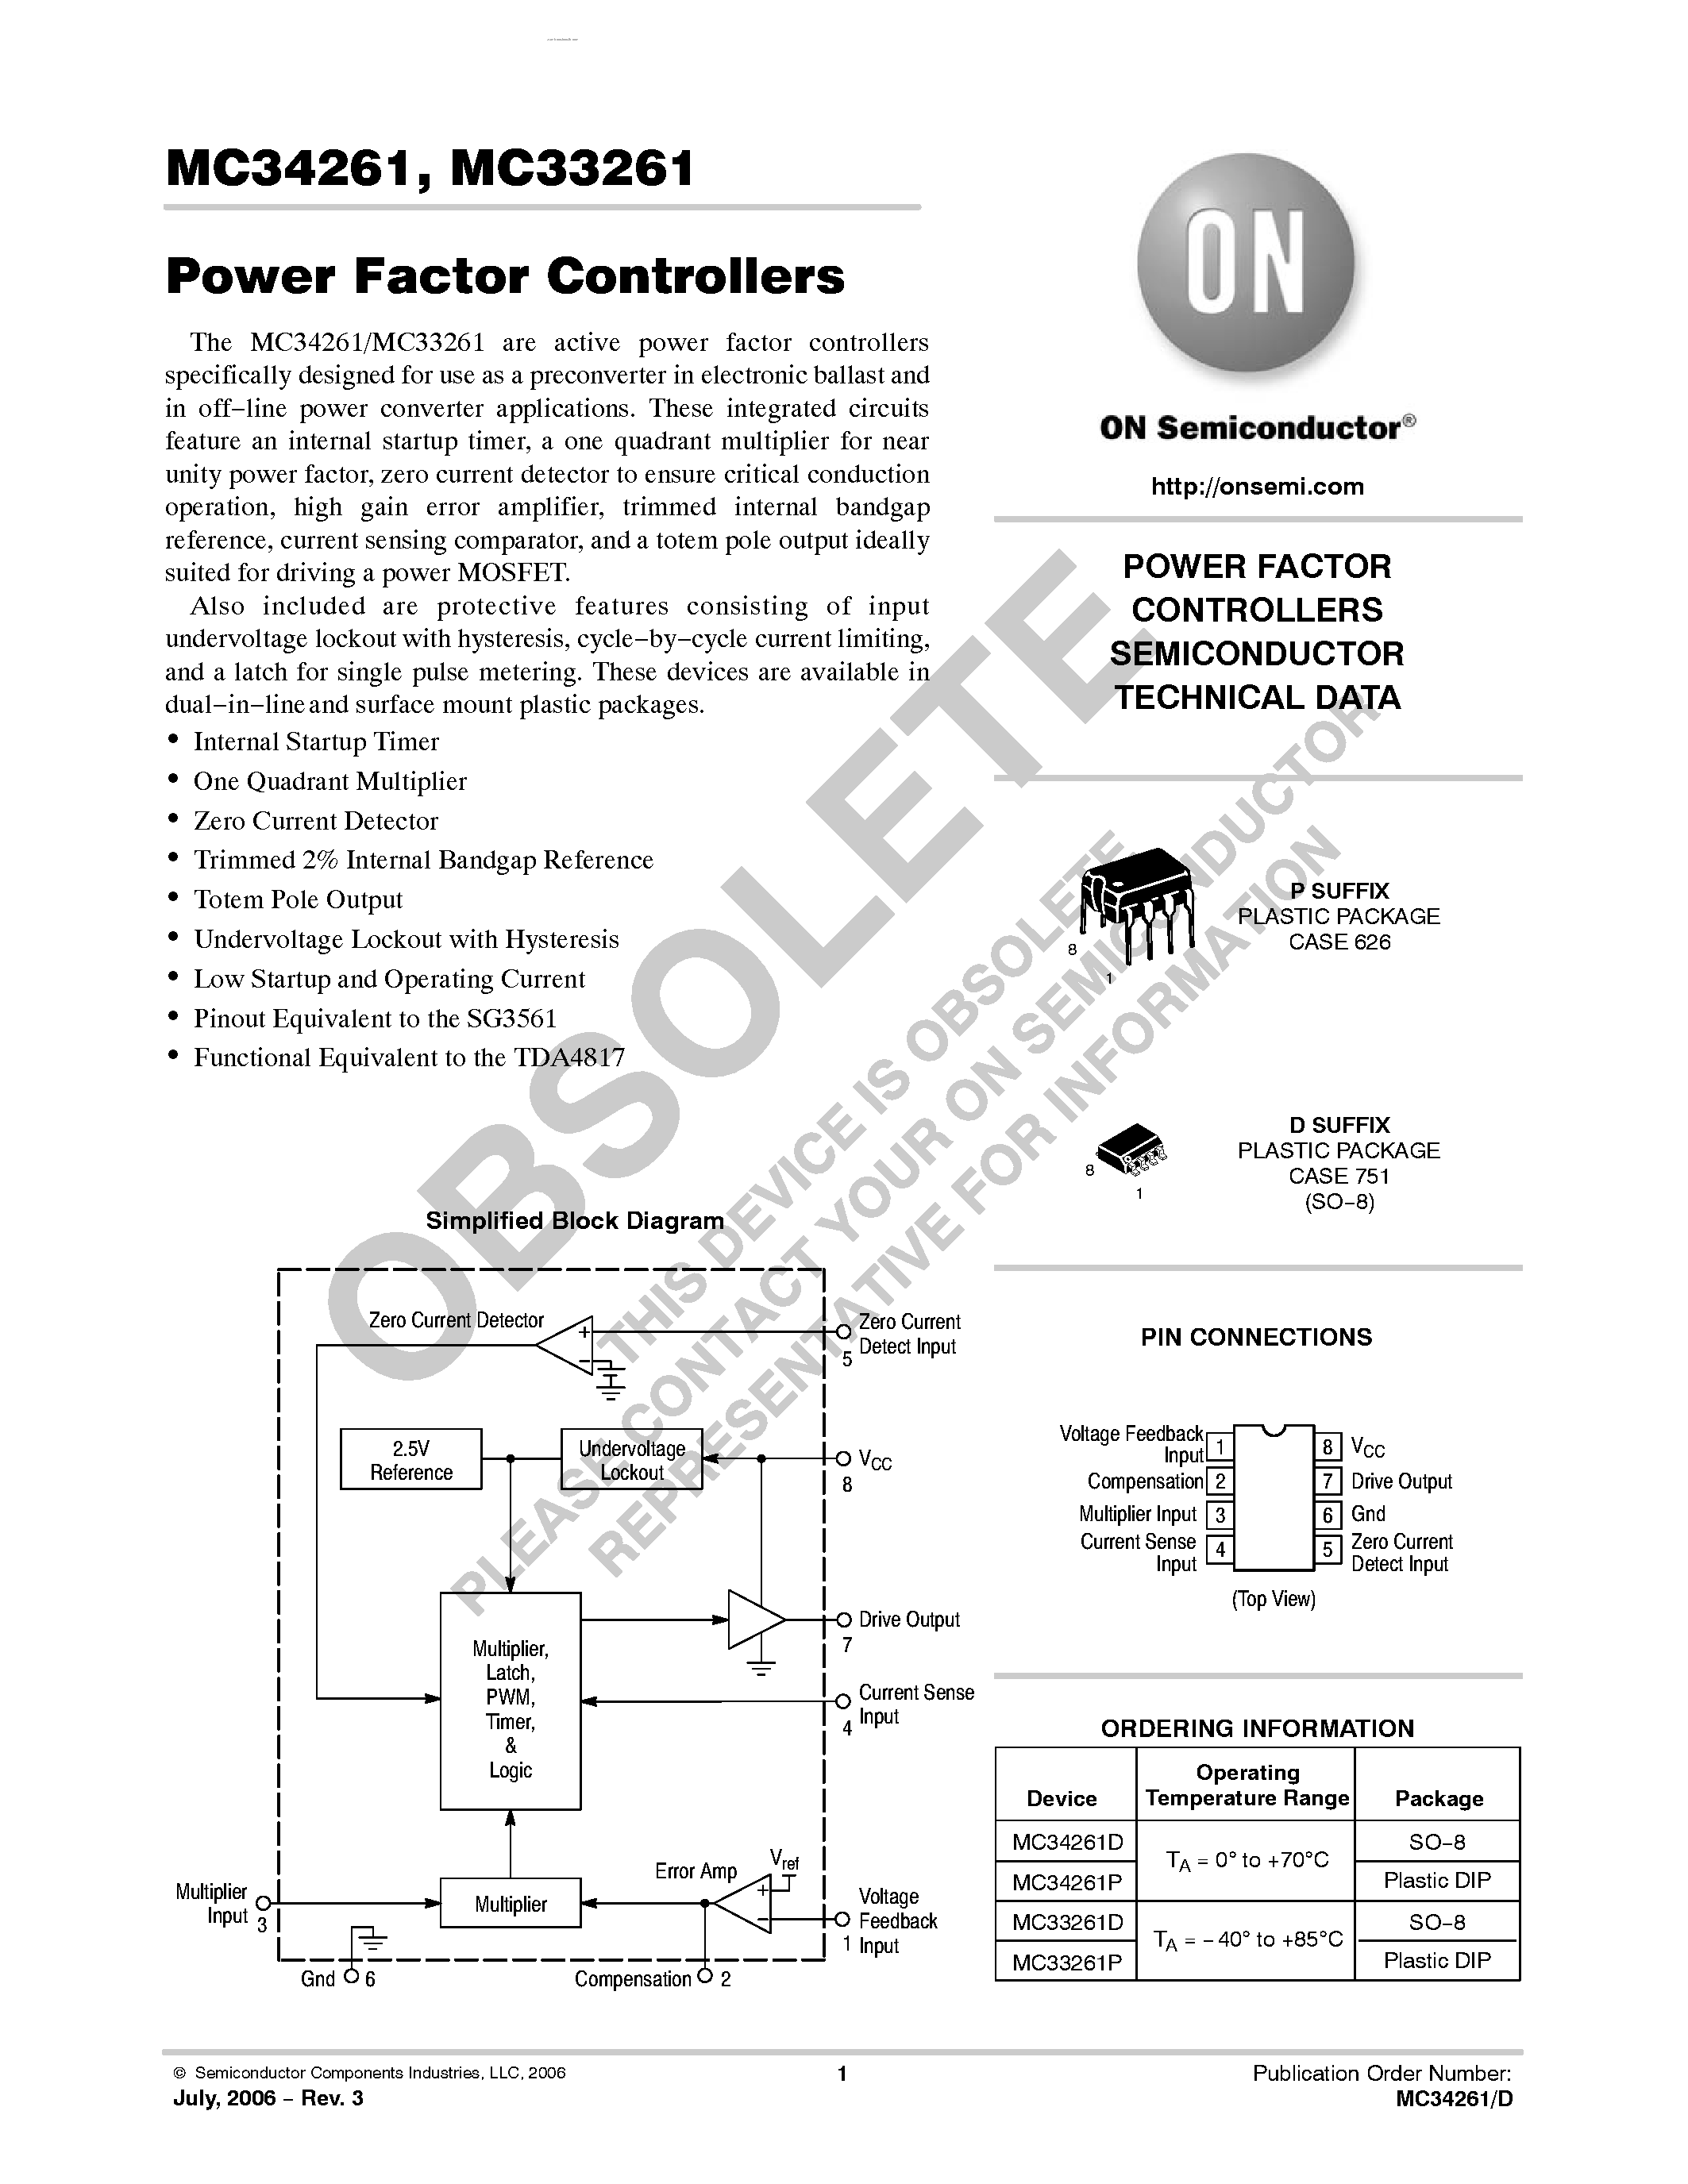 Datasheet MC33261 - (MC33261 / MC34261) Power Factor Controllers page 1